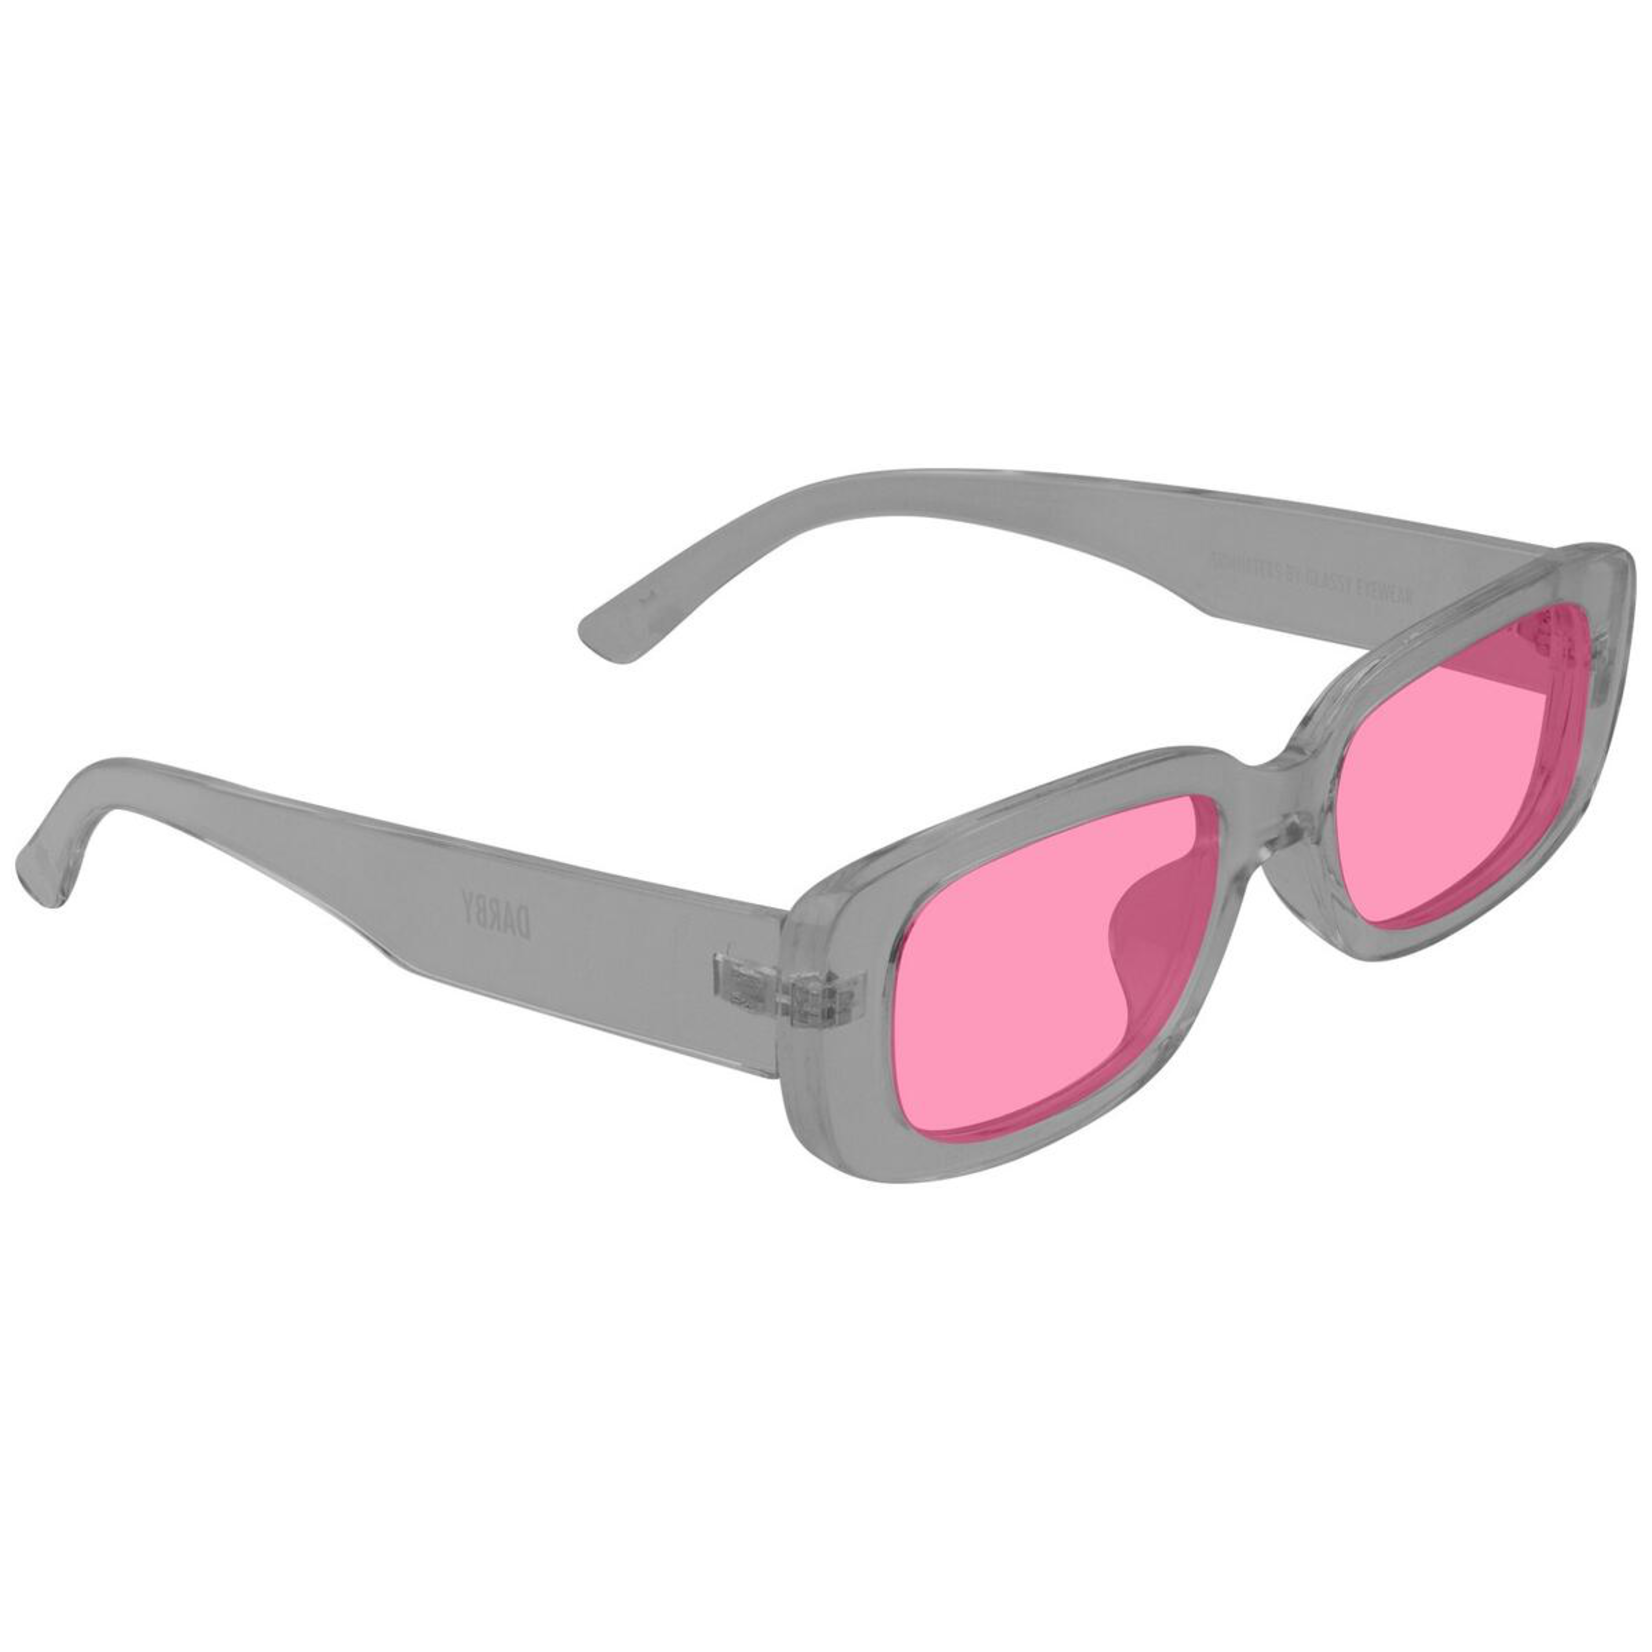 Glassy Eyewear Darby - Transparent Grey/Pink Lens